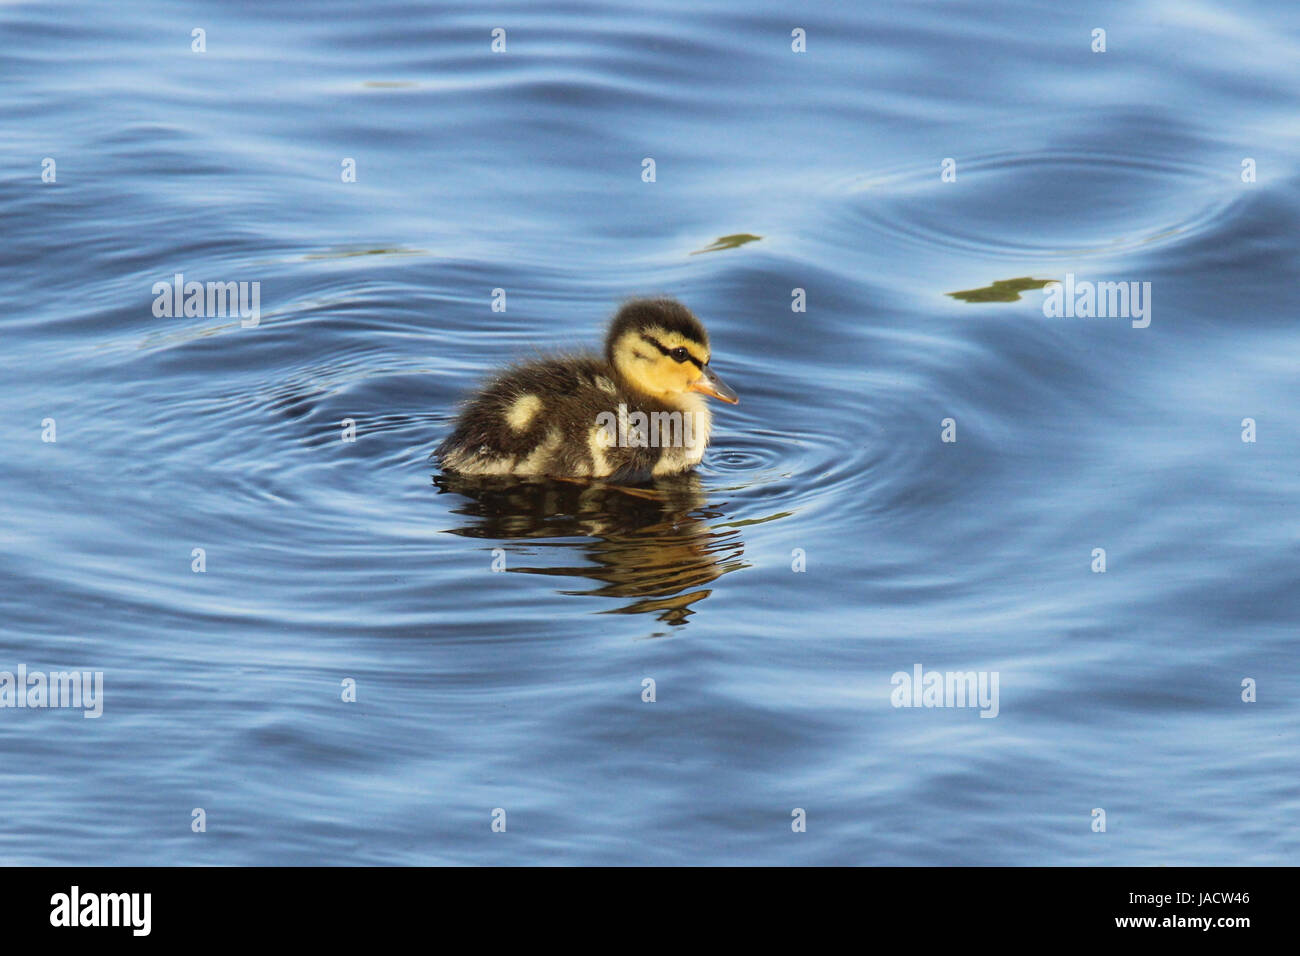 A little mallard duckling swimming on a pond Stock Photo